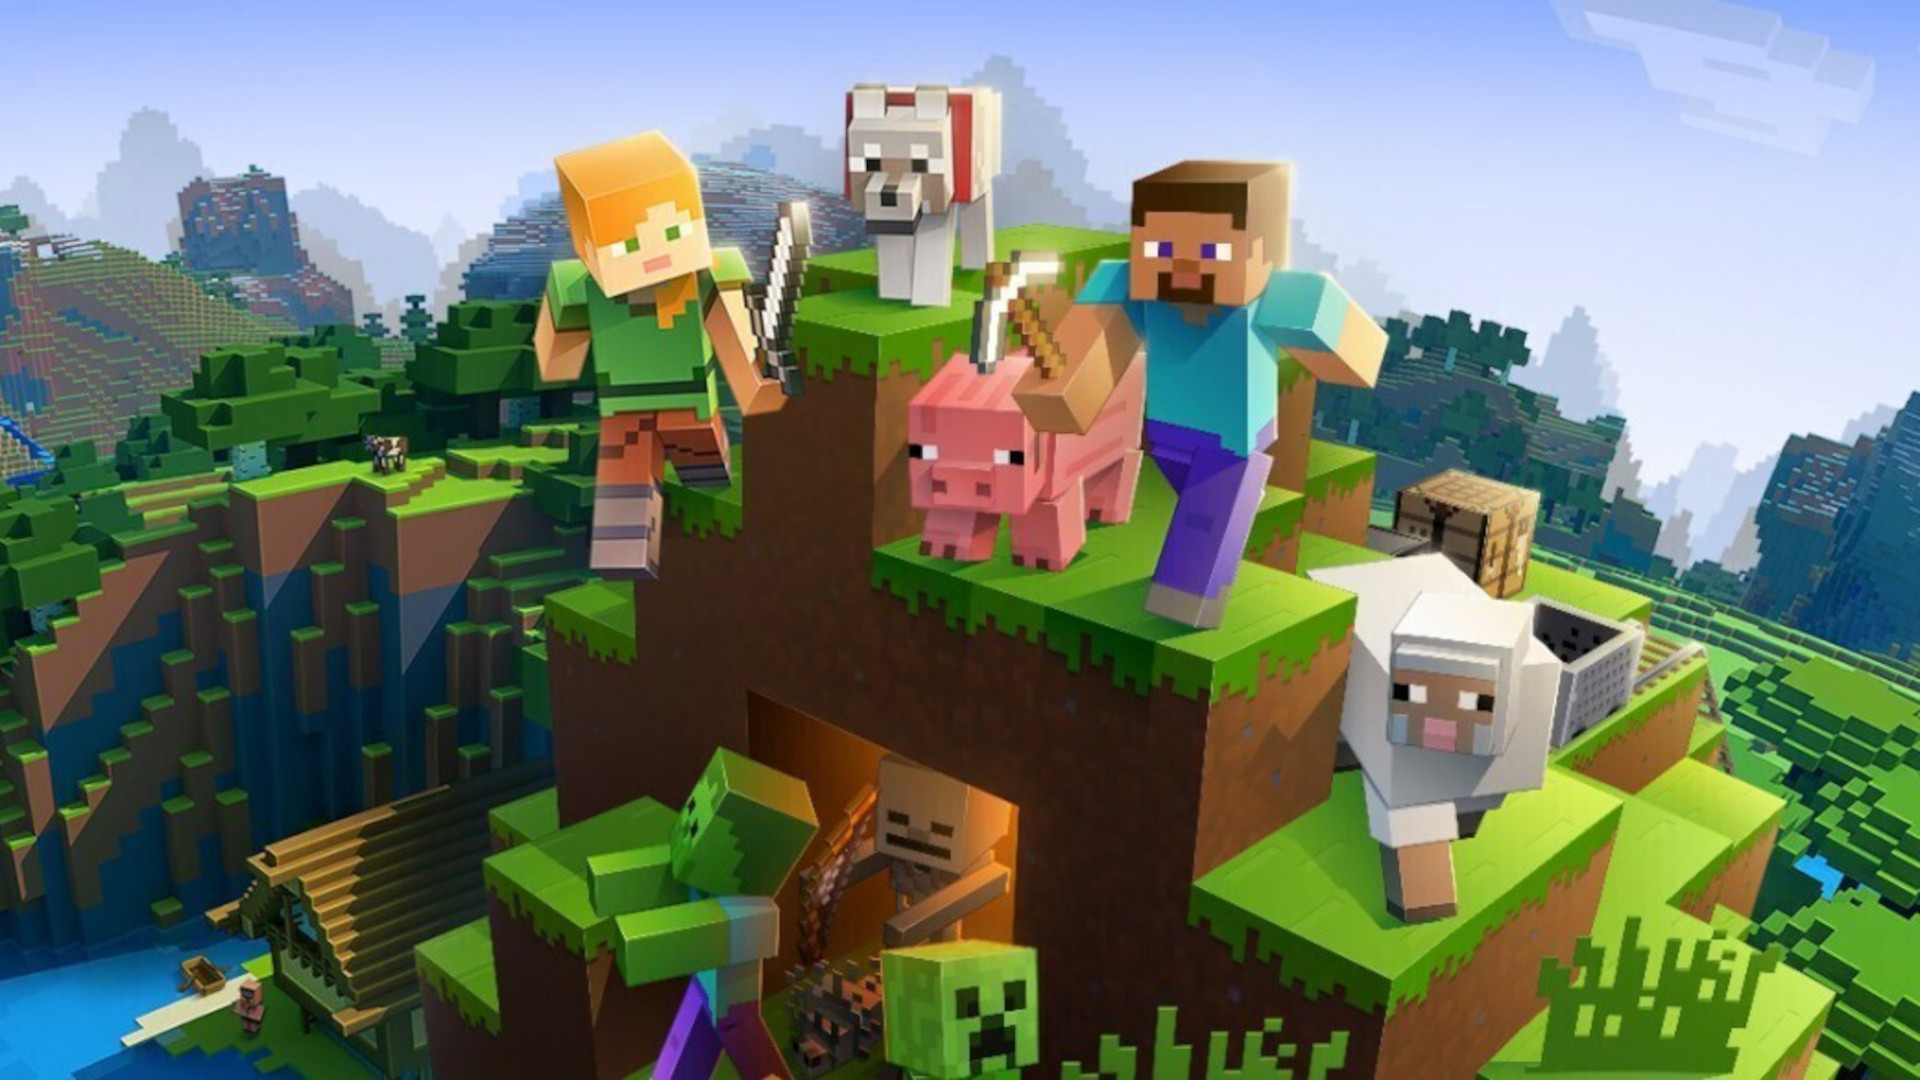 game bertahan hidup terbaik: Karakter Minecraft berdiri di atas gua tempat tanaman merambat keluar